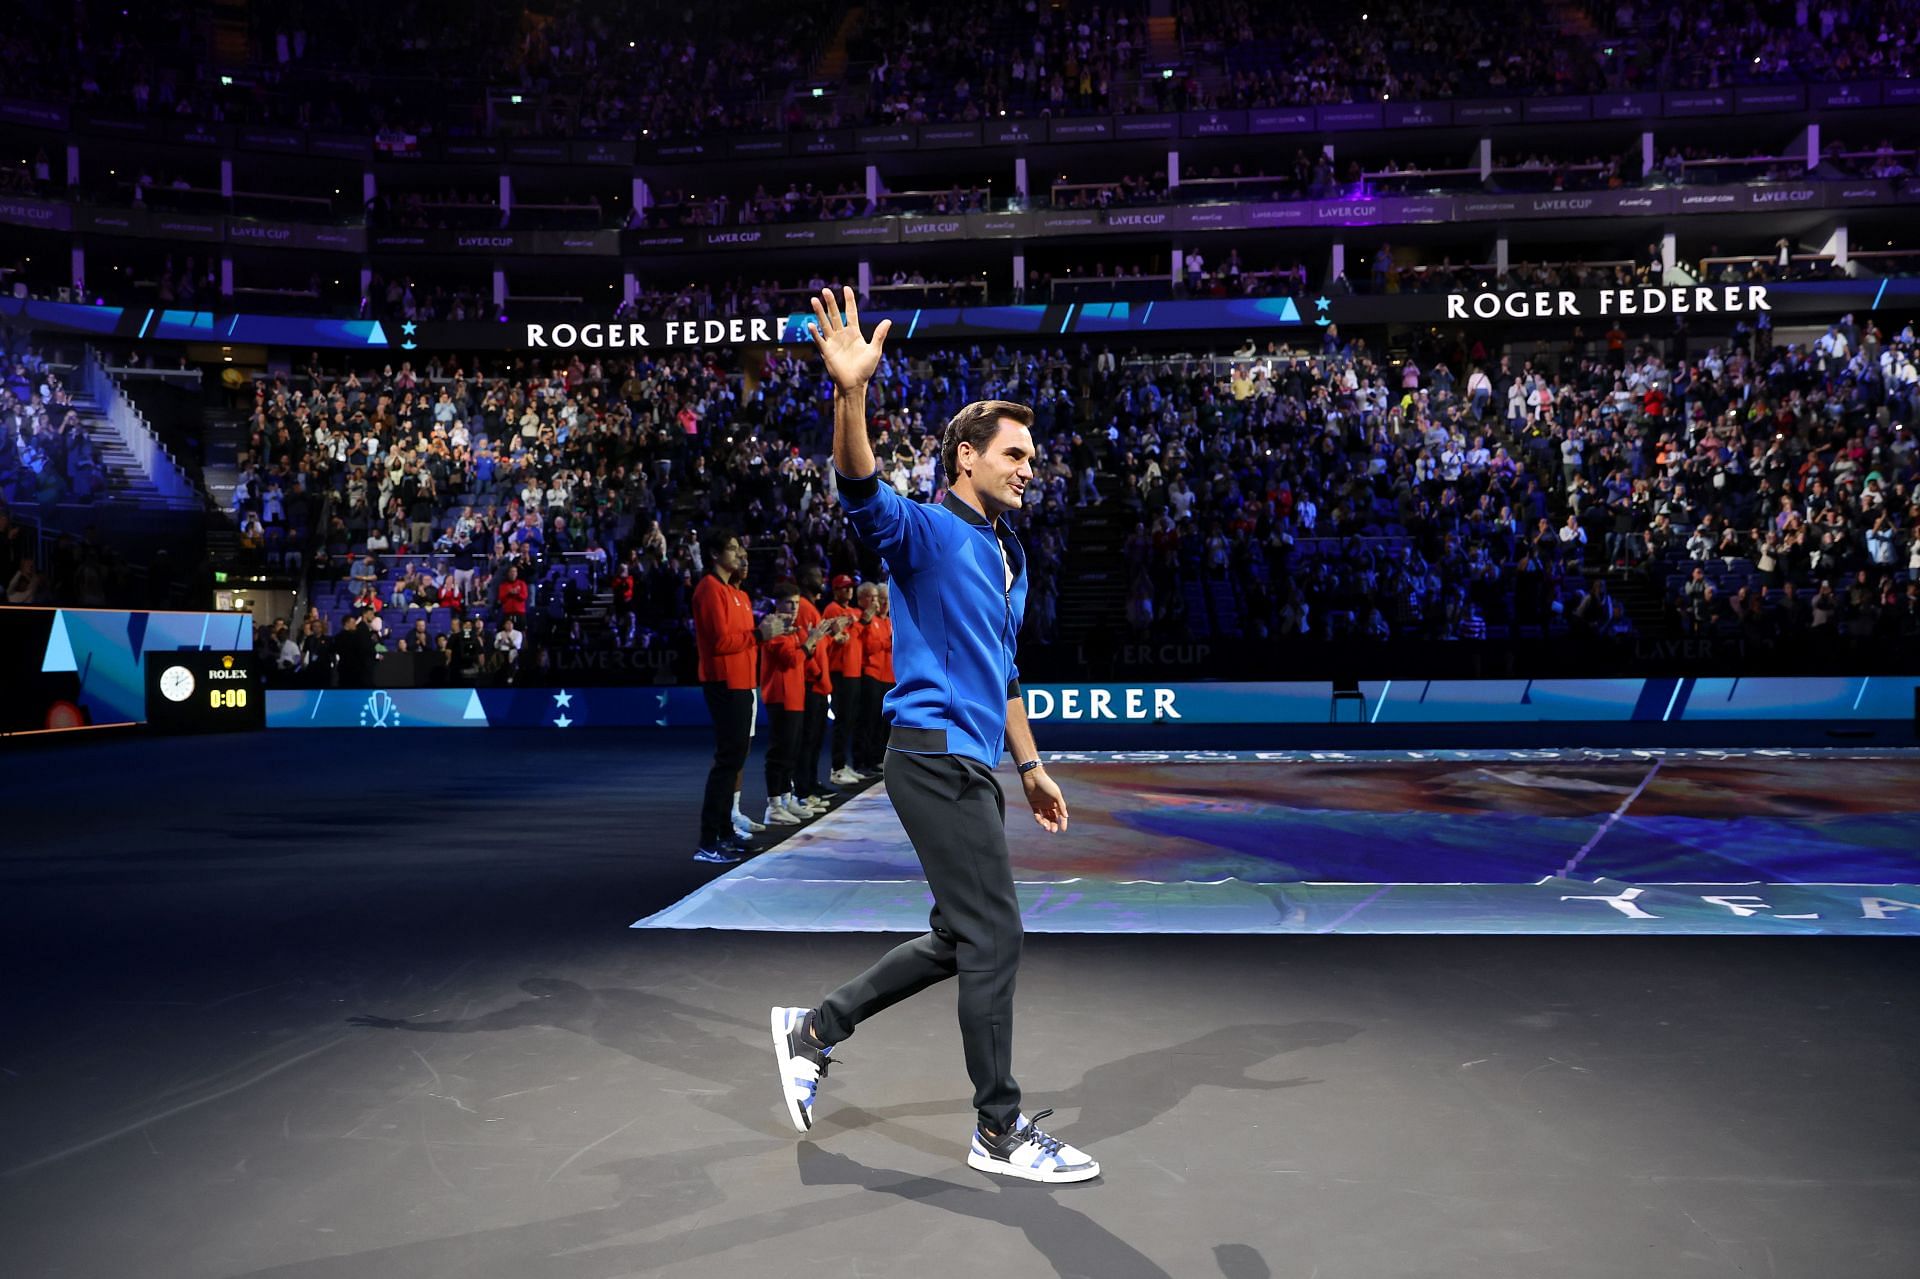 Roger Federer at the Laver Cup